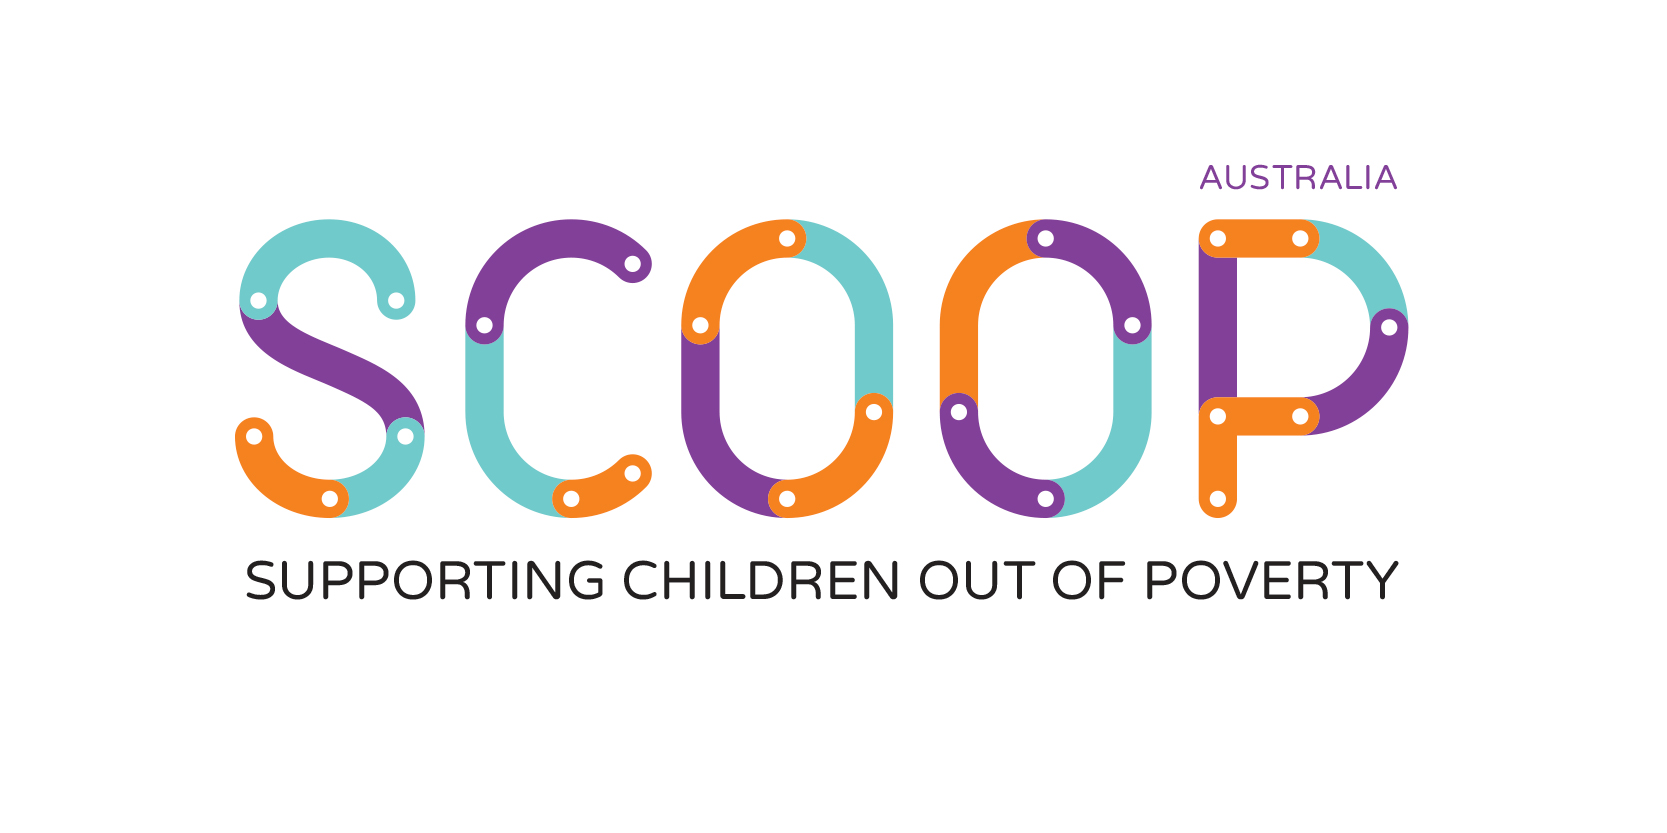 The SCOOP Foundation Austalia logo